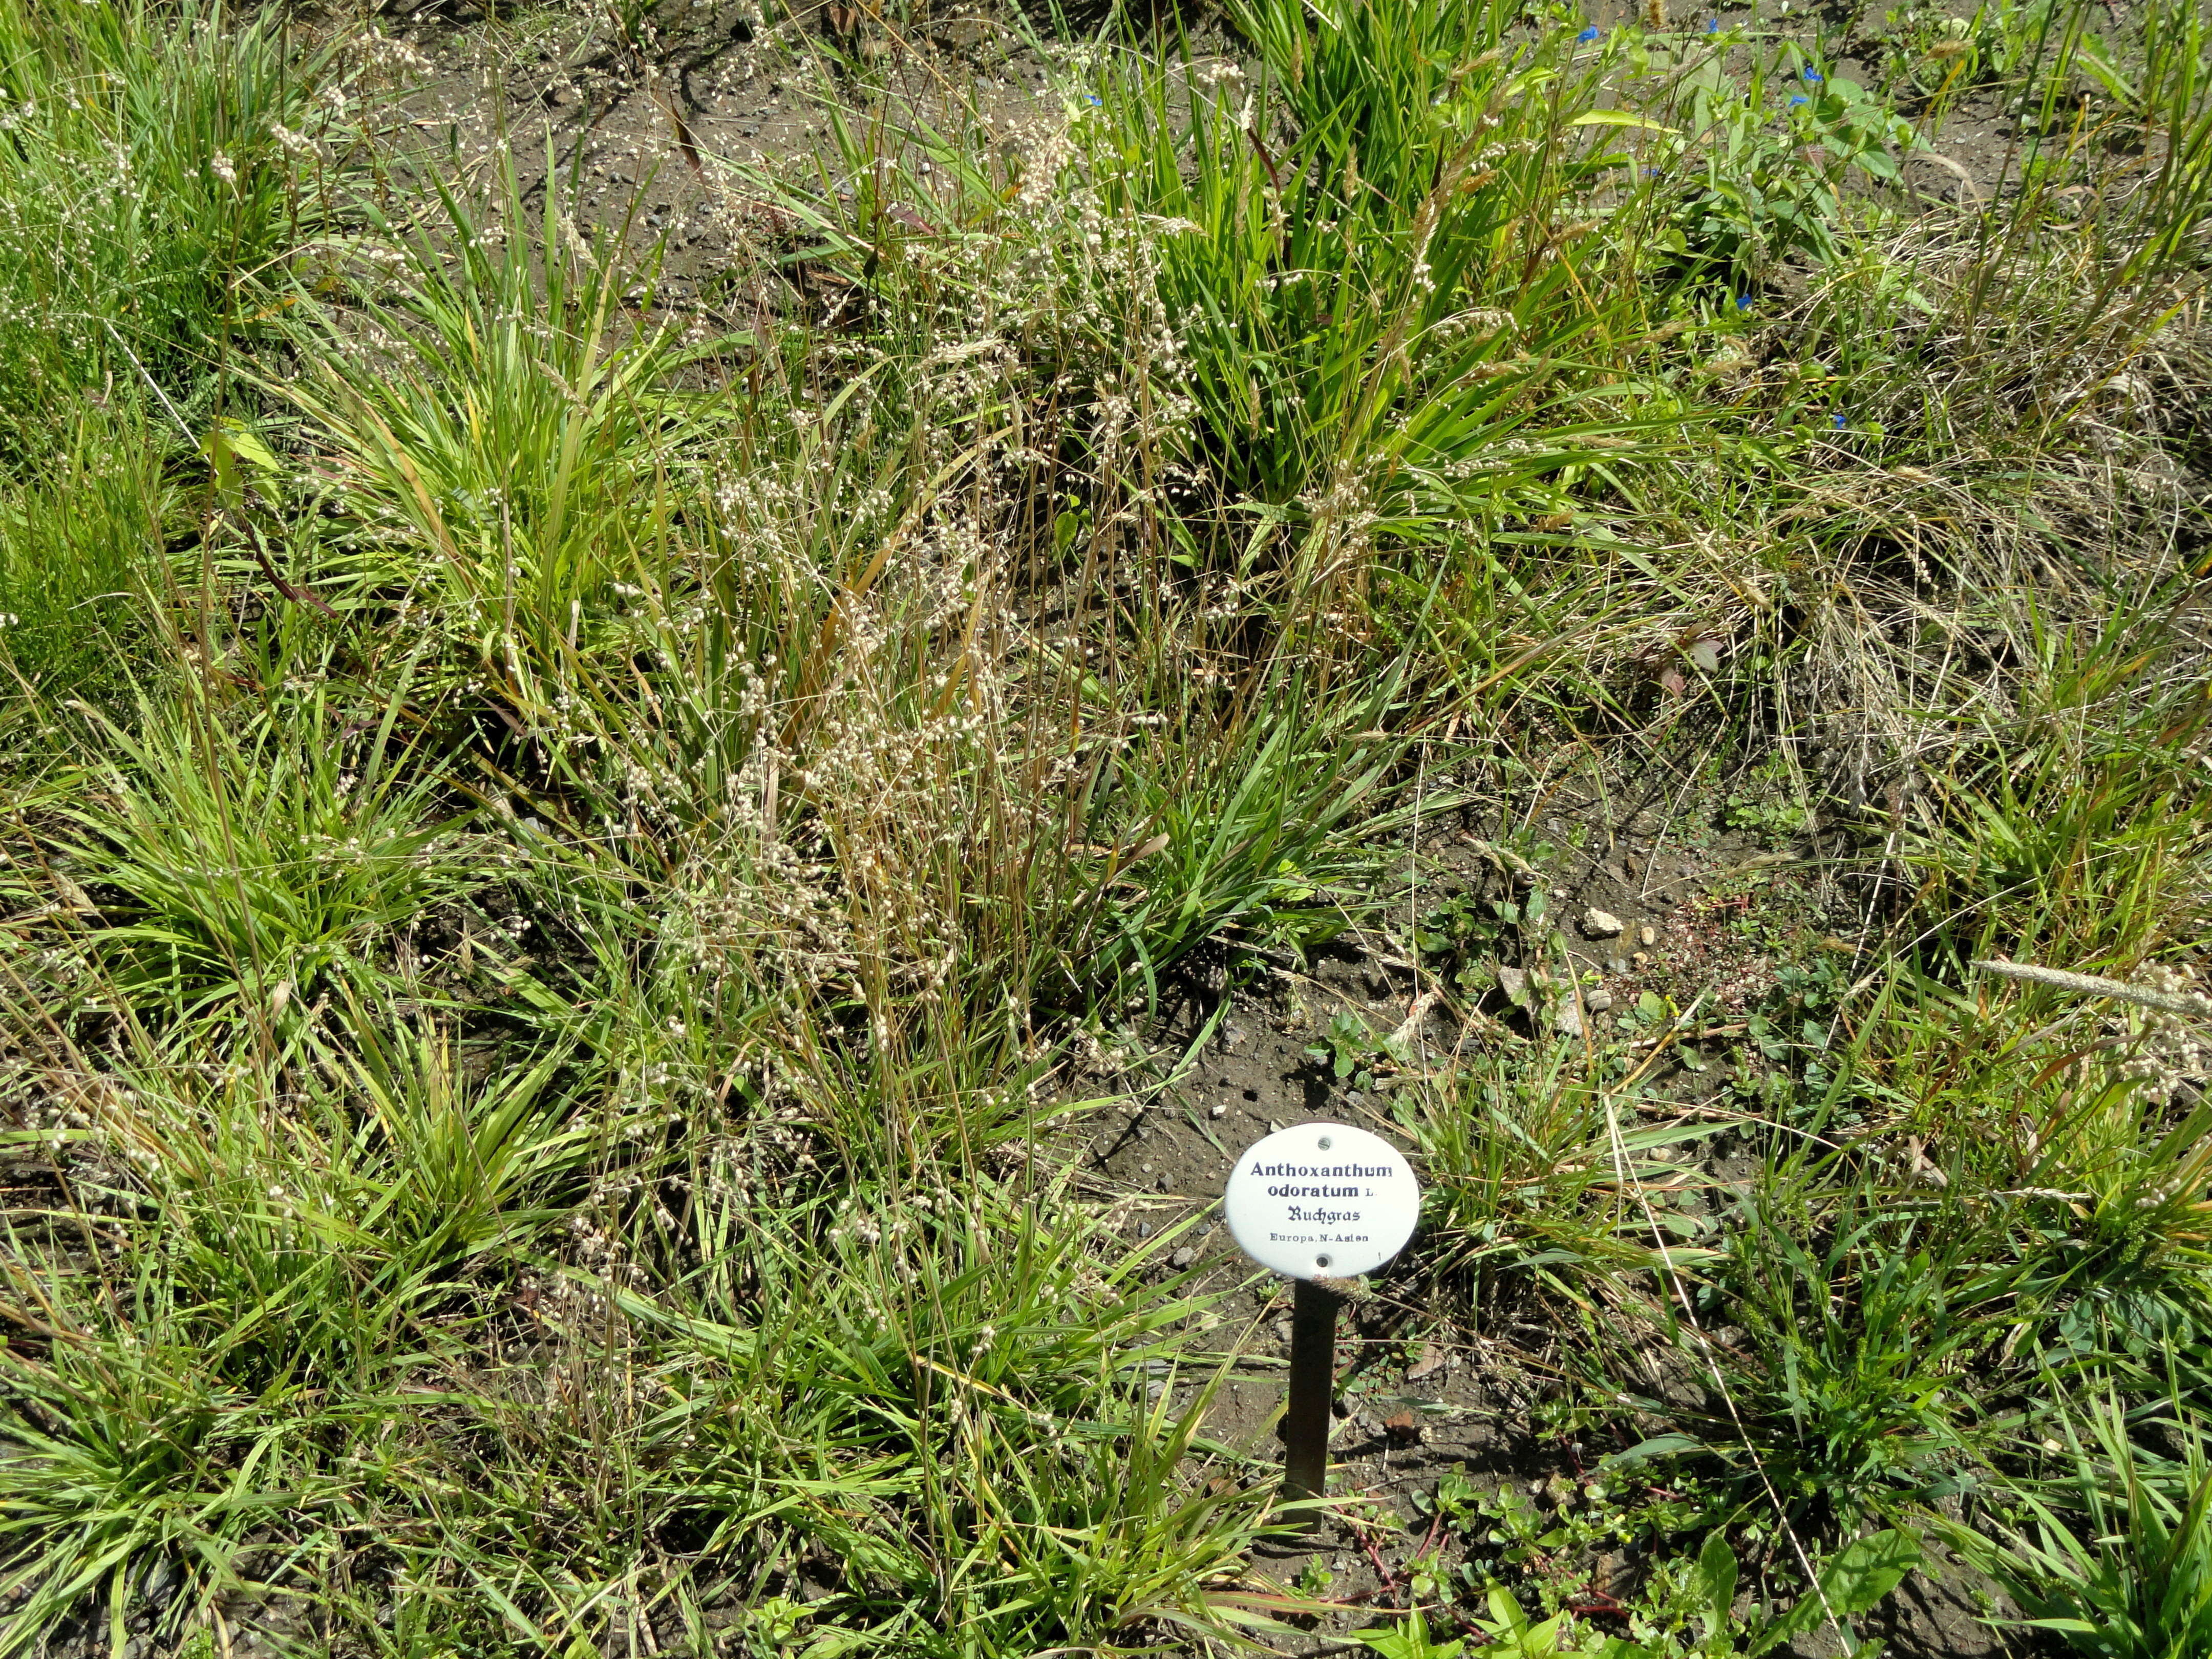 Image of Sweet vernal grass